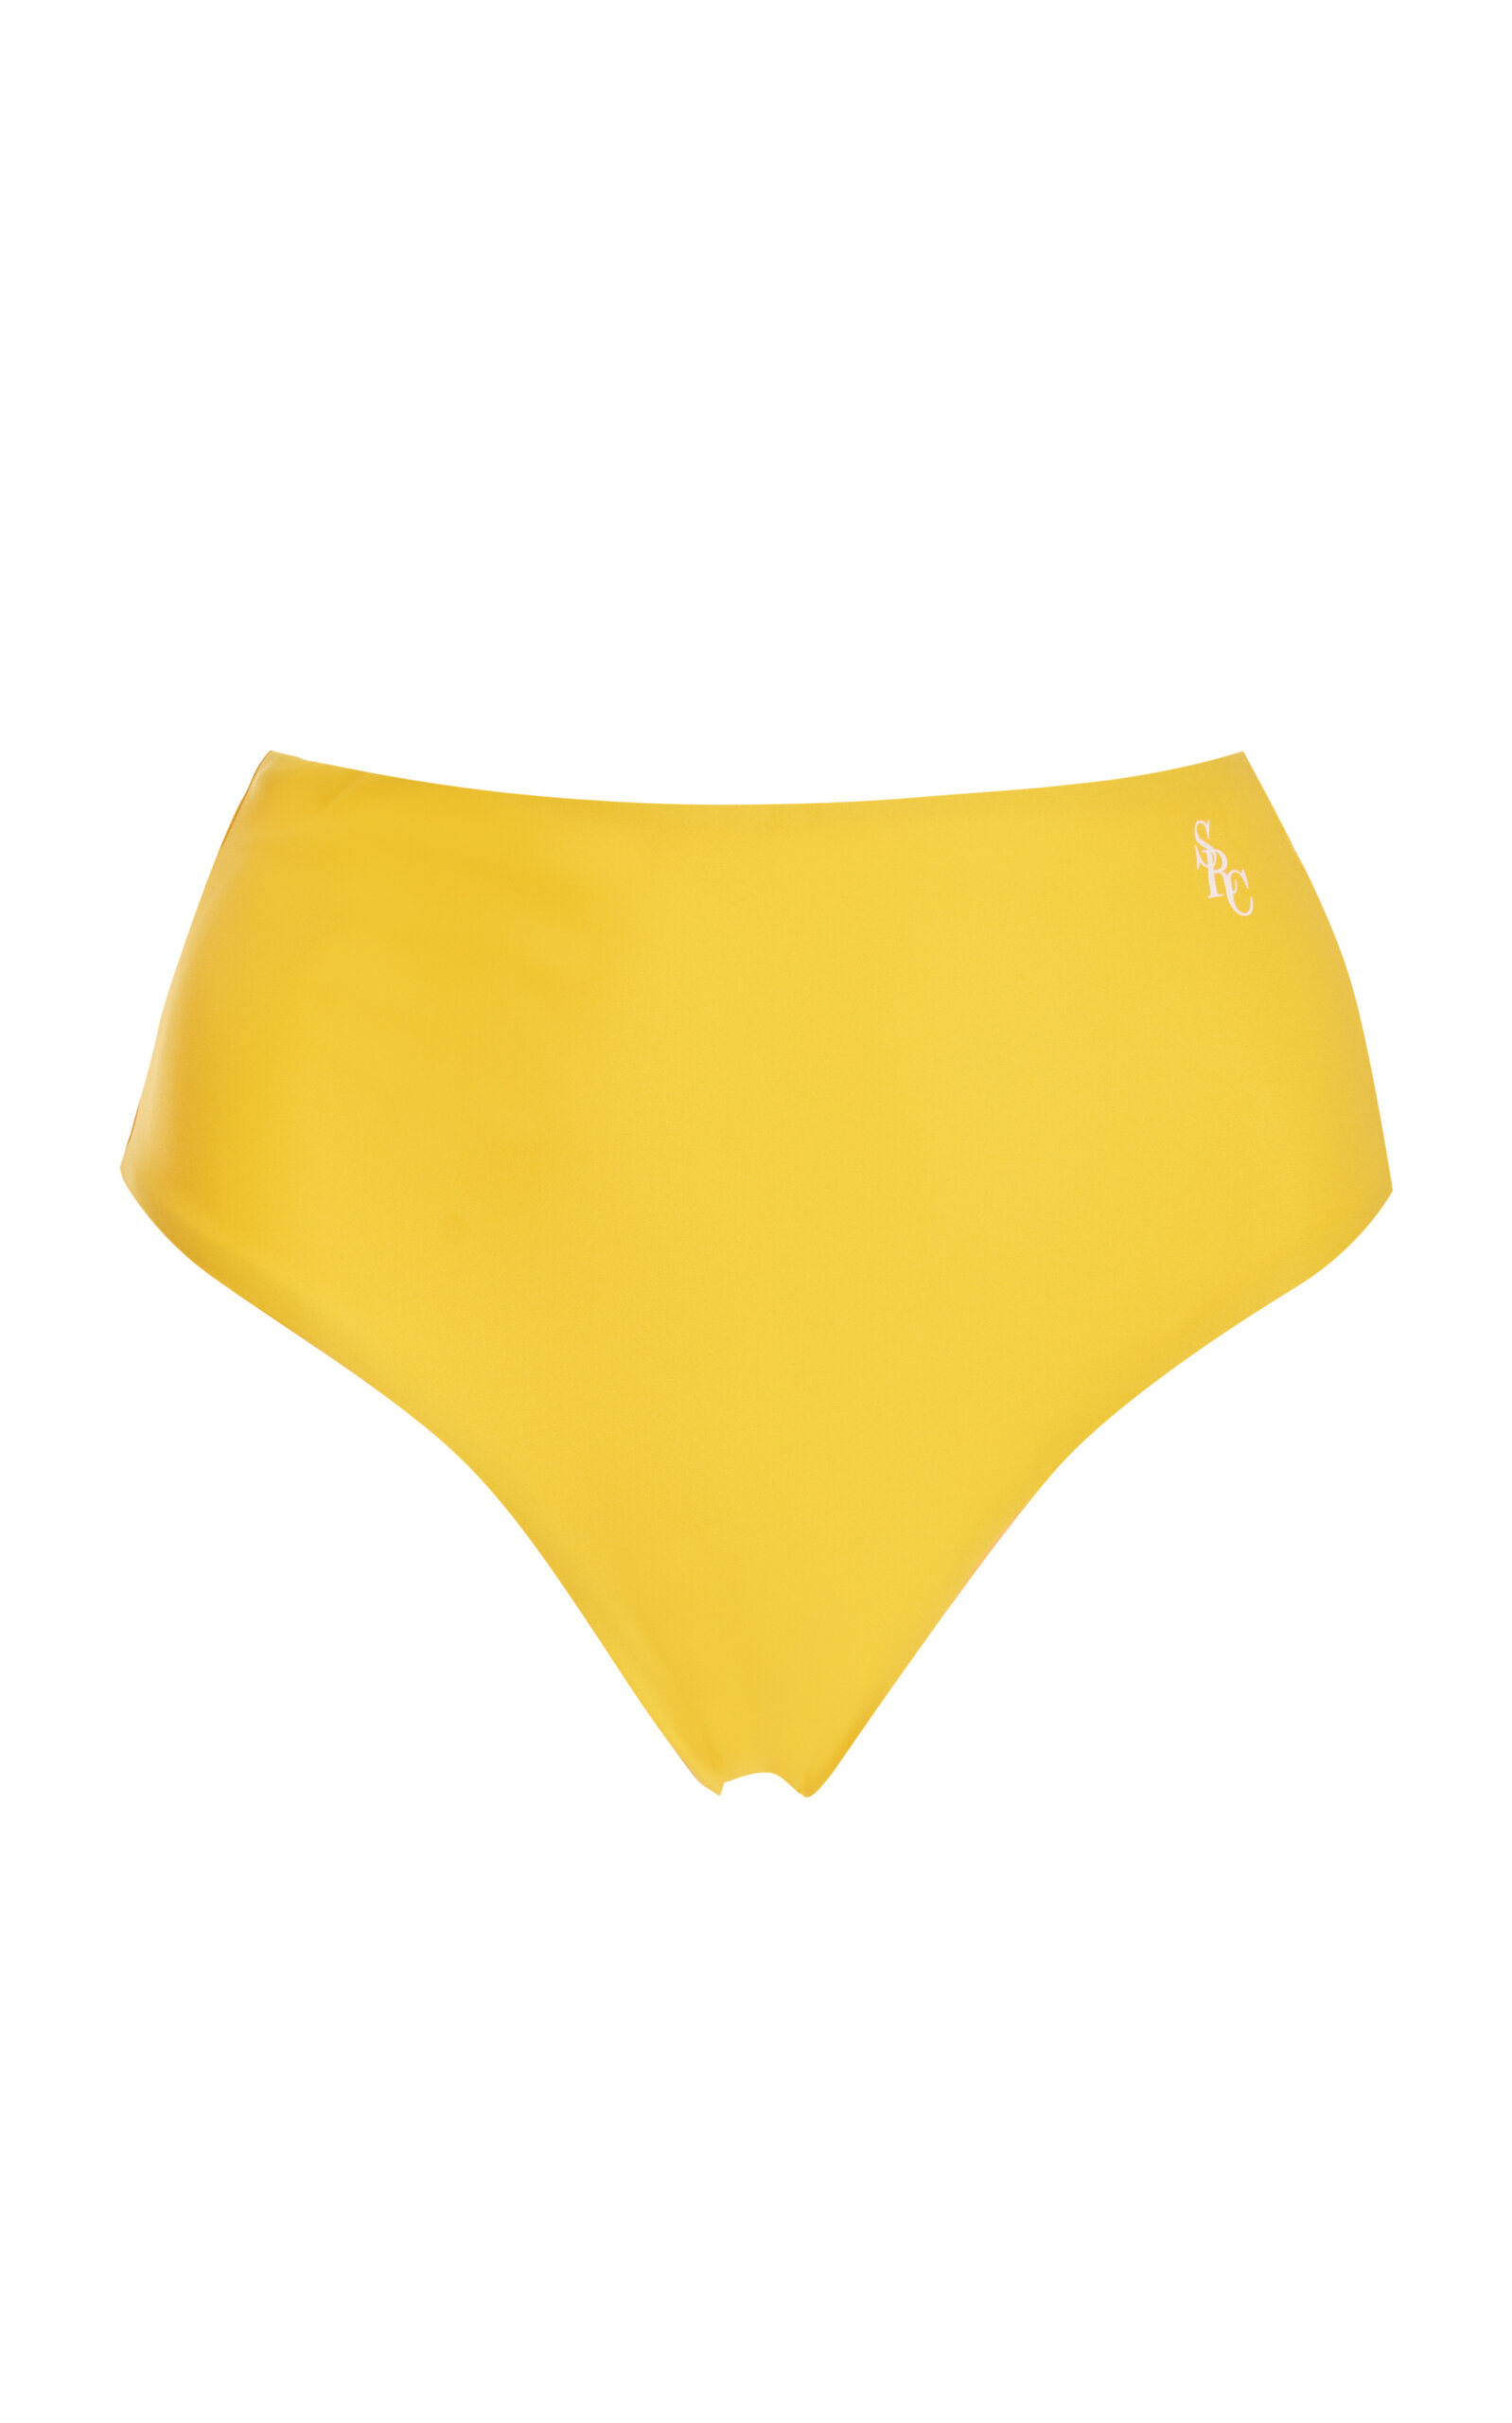 Sporty & Rich - Brigitte Bikini Bottom - Yellow - M - Moda Operandi